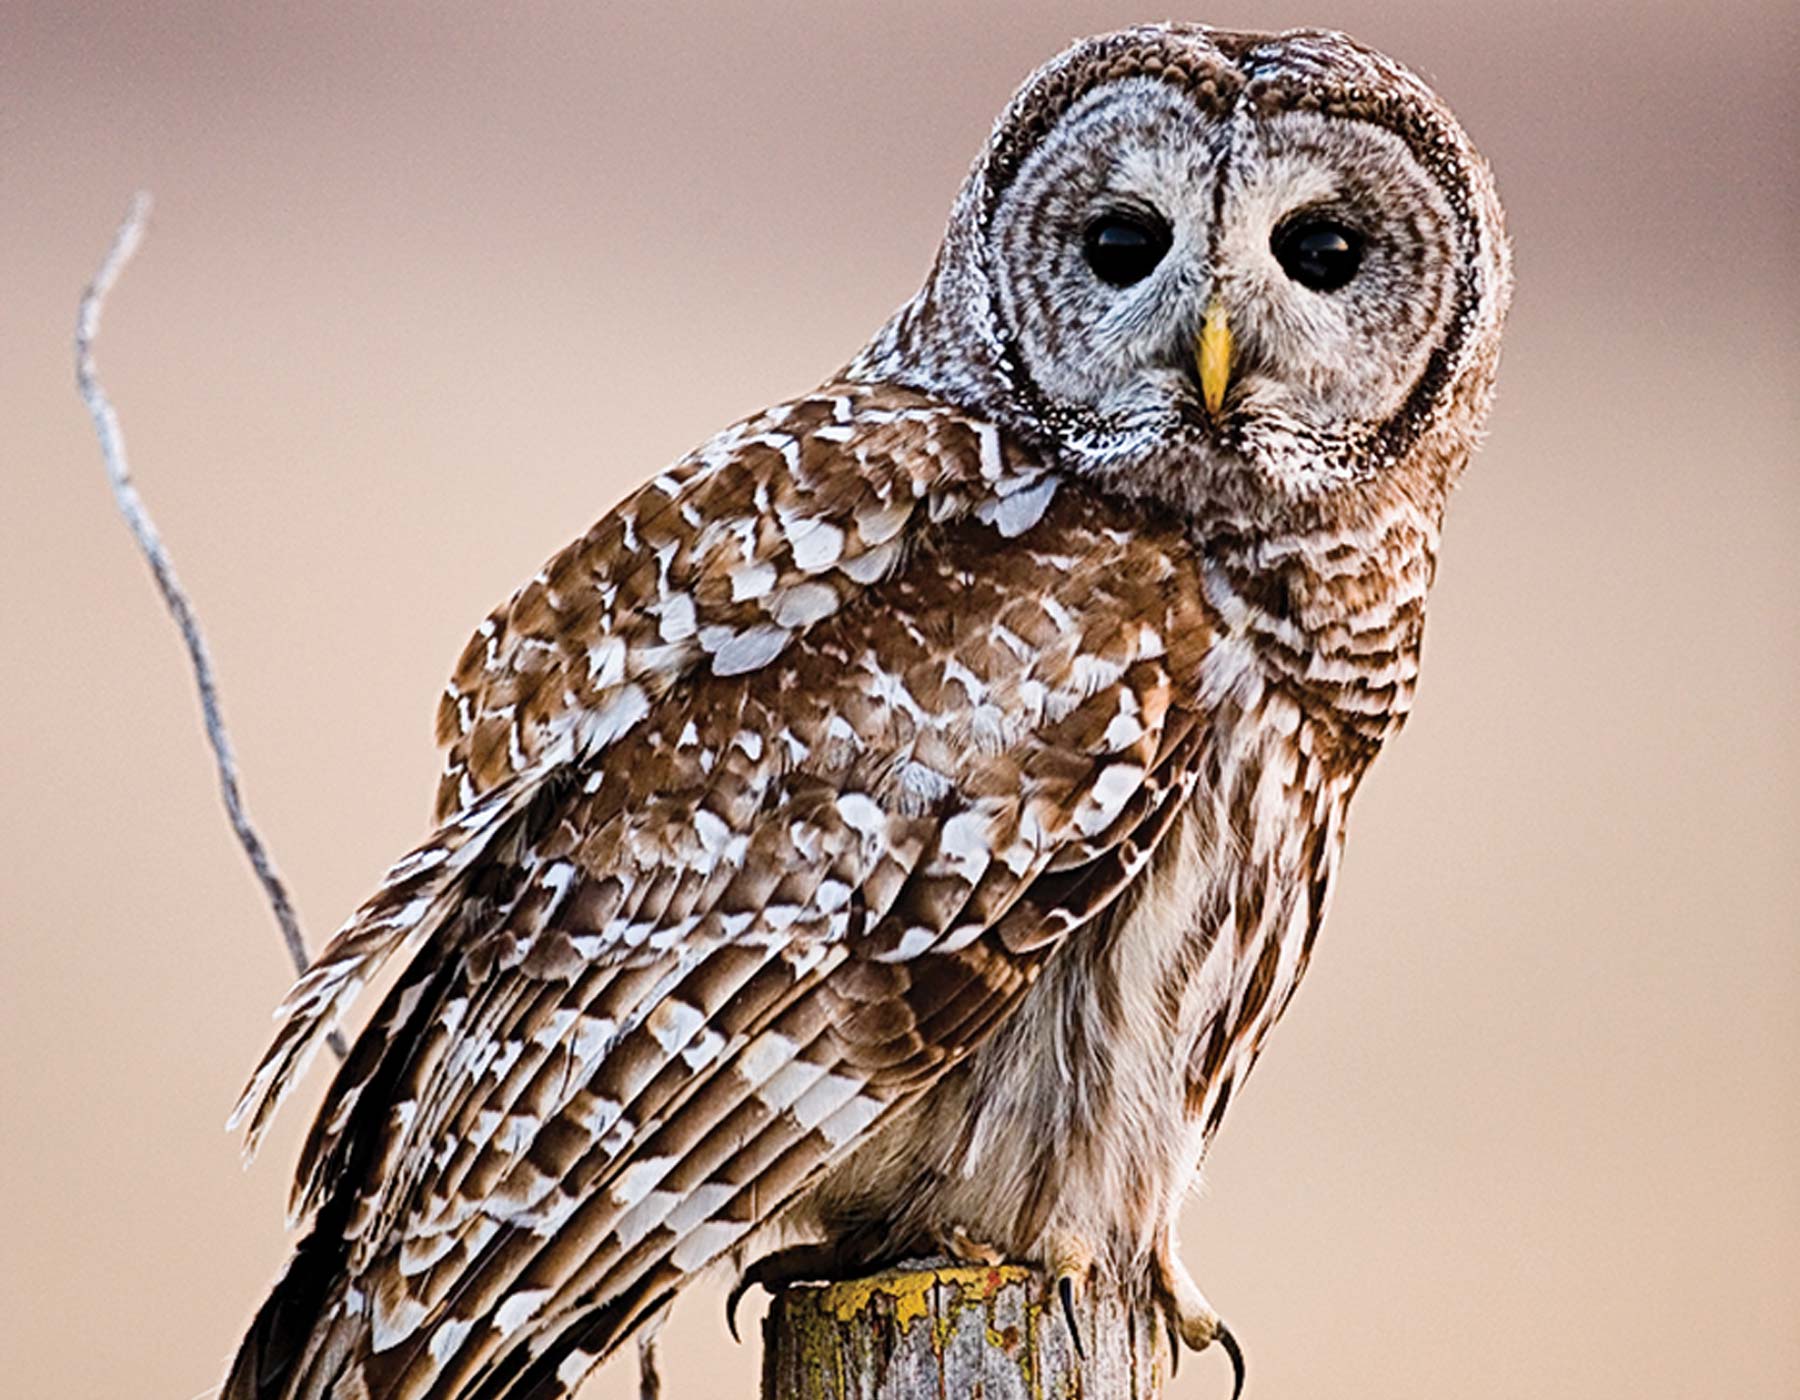 Barred owl nest a backyard wildlife watching treat | Missouri ...